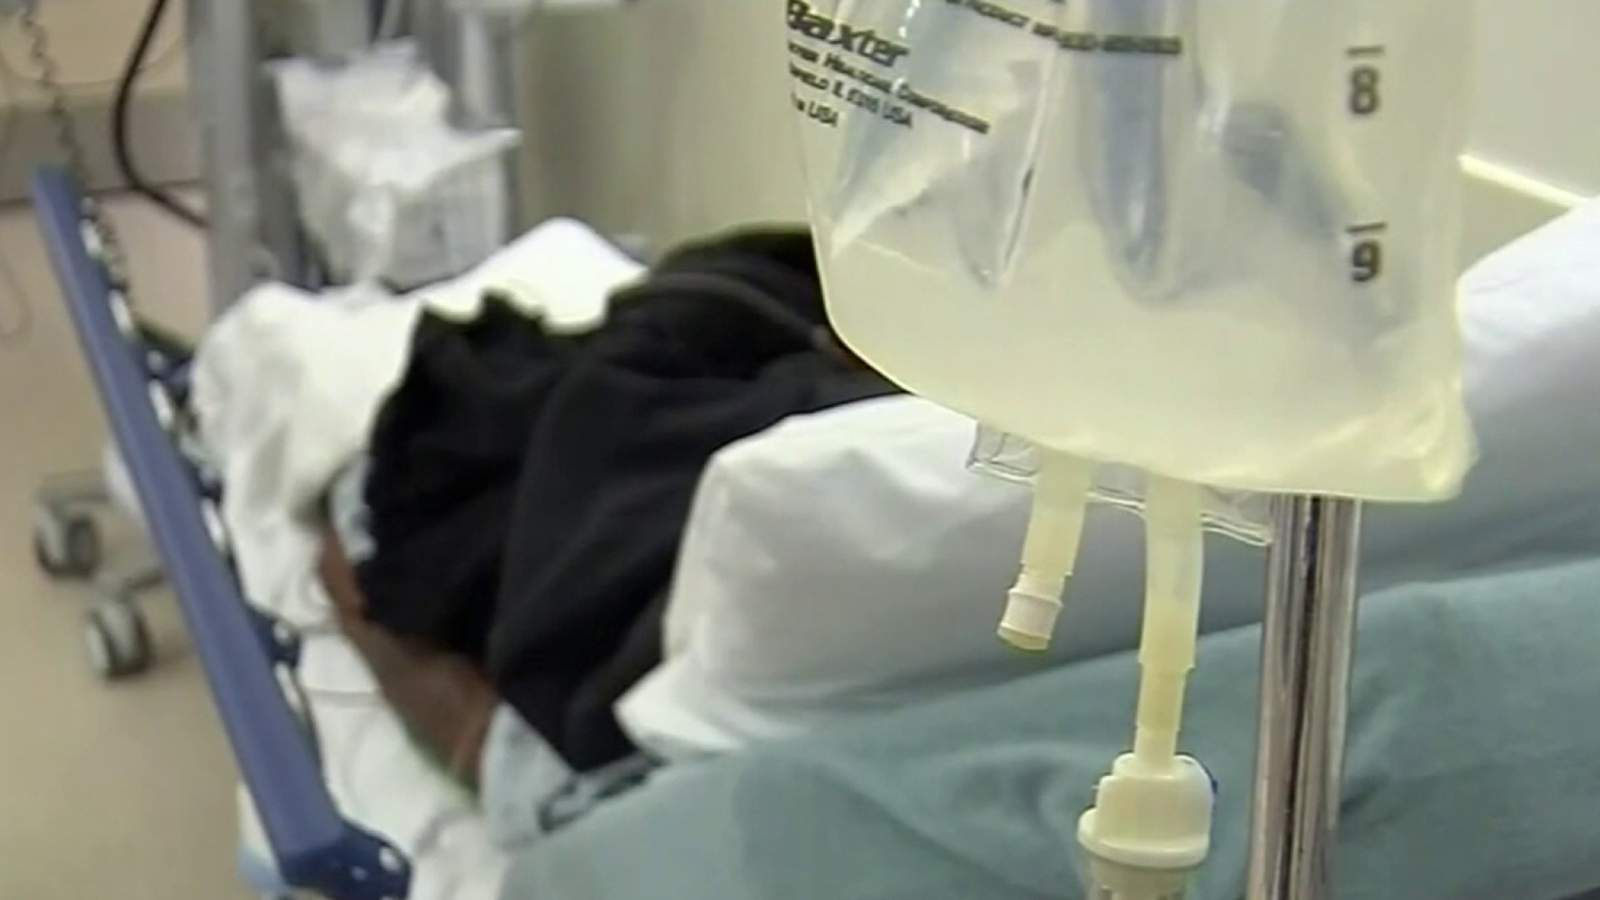 Michigan chief medical executive warns of possible ‘second wave’ of coronavirus pandemic